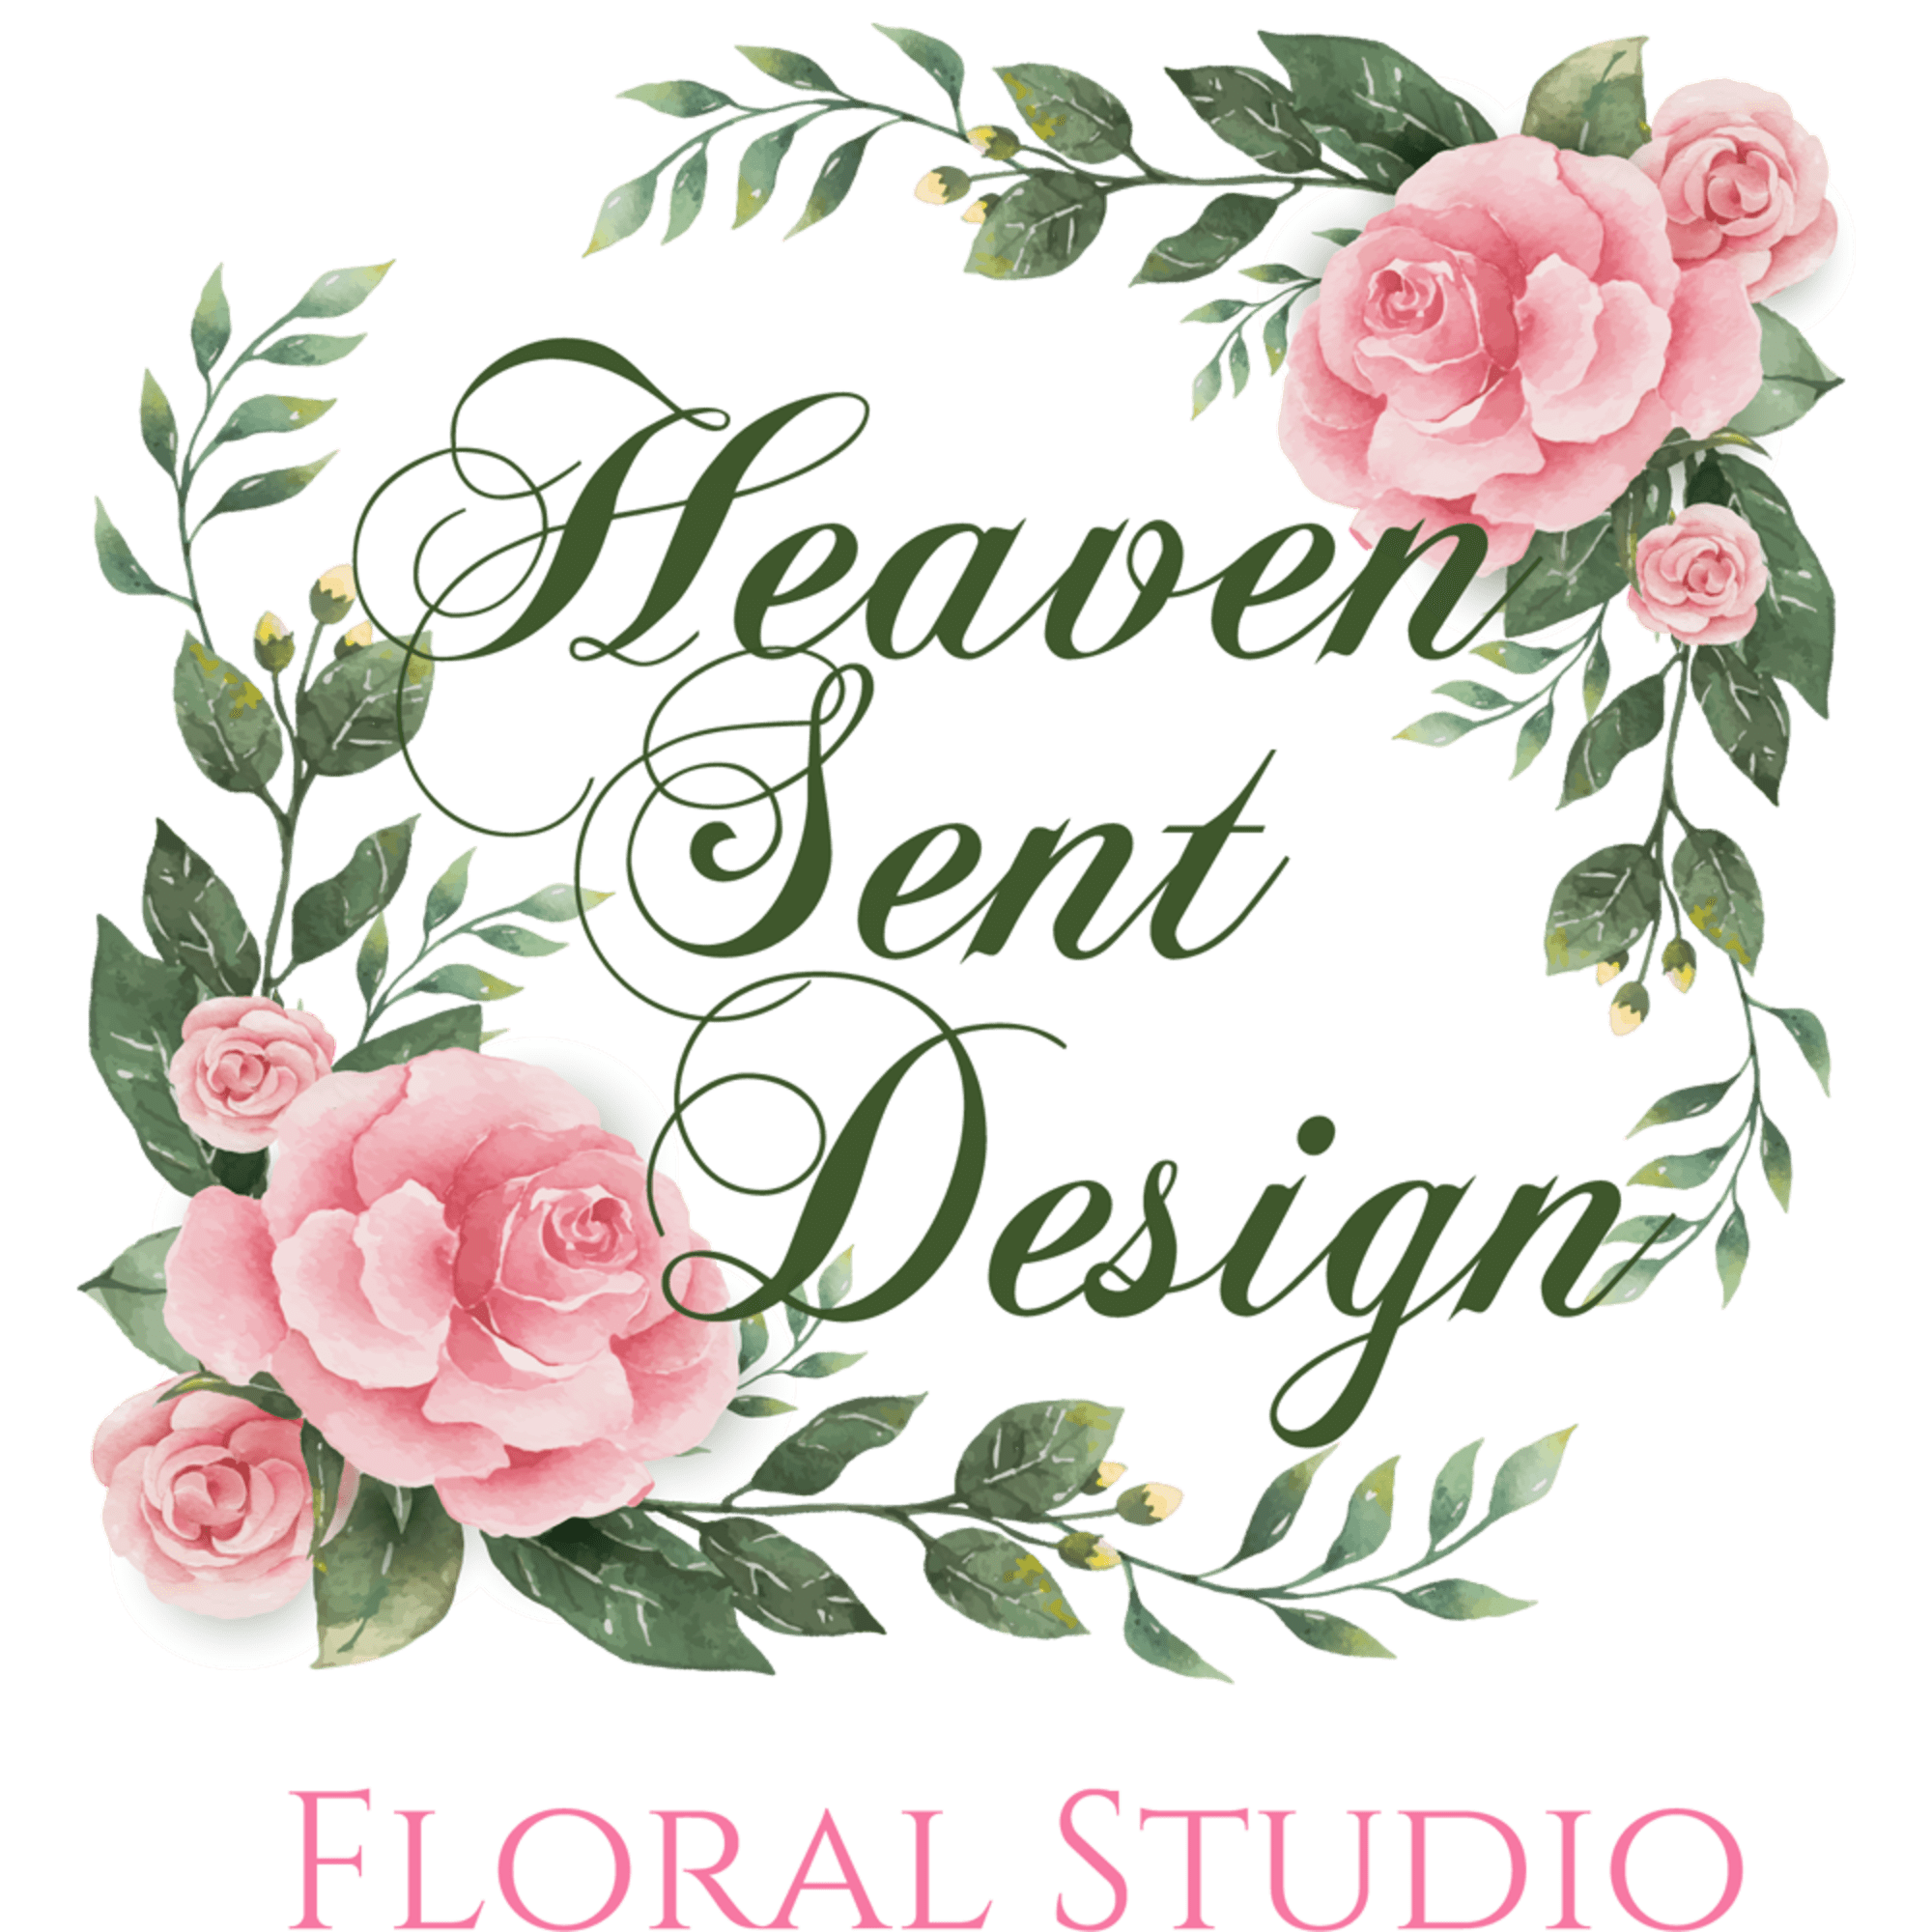 Lavender in Anaheim Dreams Heaven Studio Design Hills, Floral CA | Sent